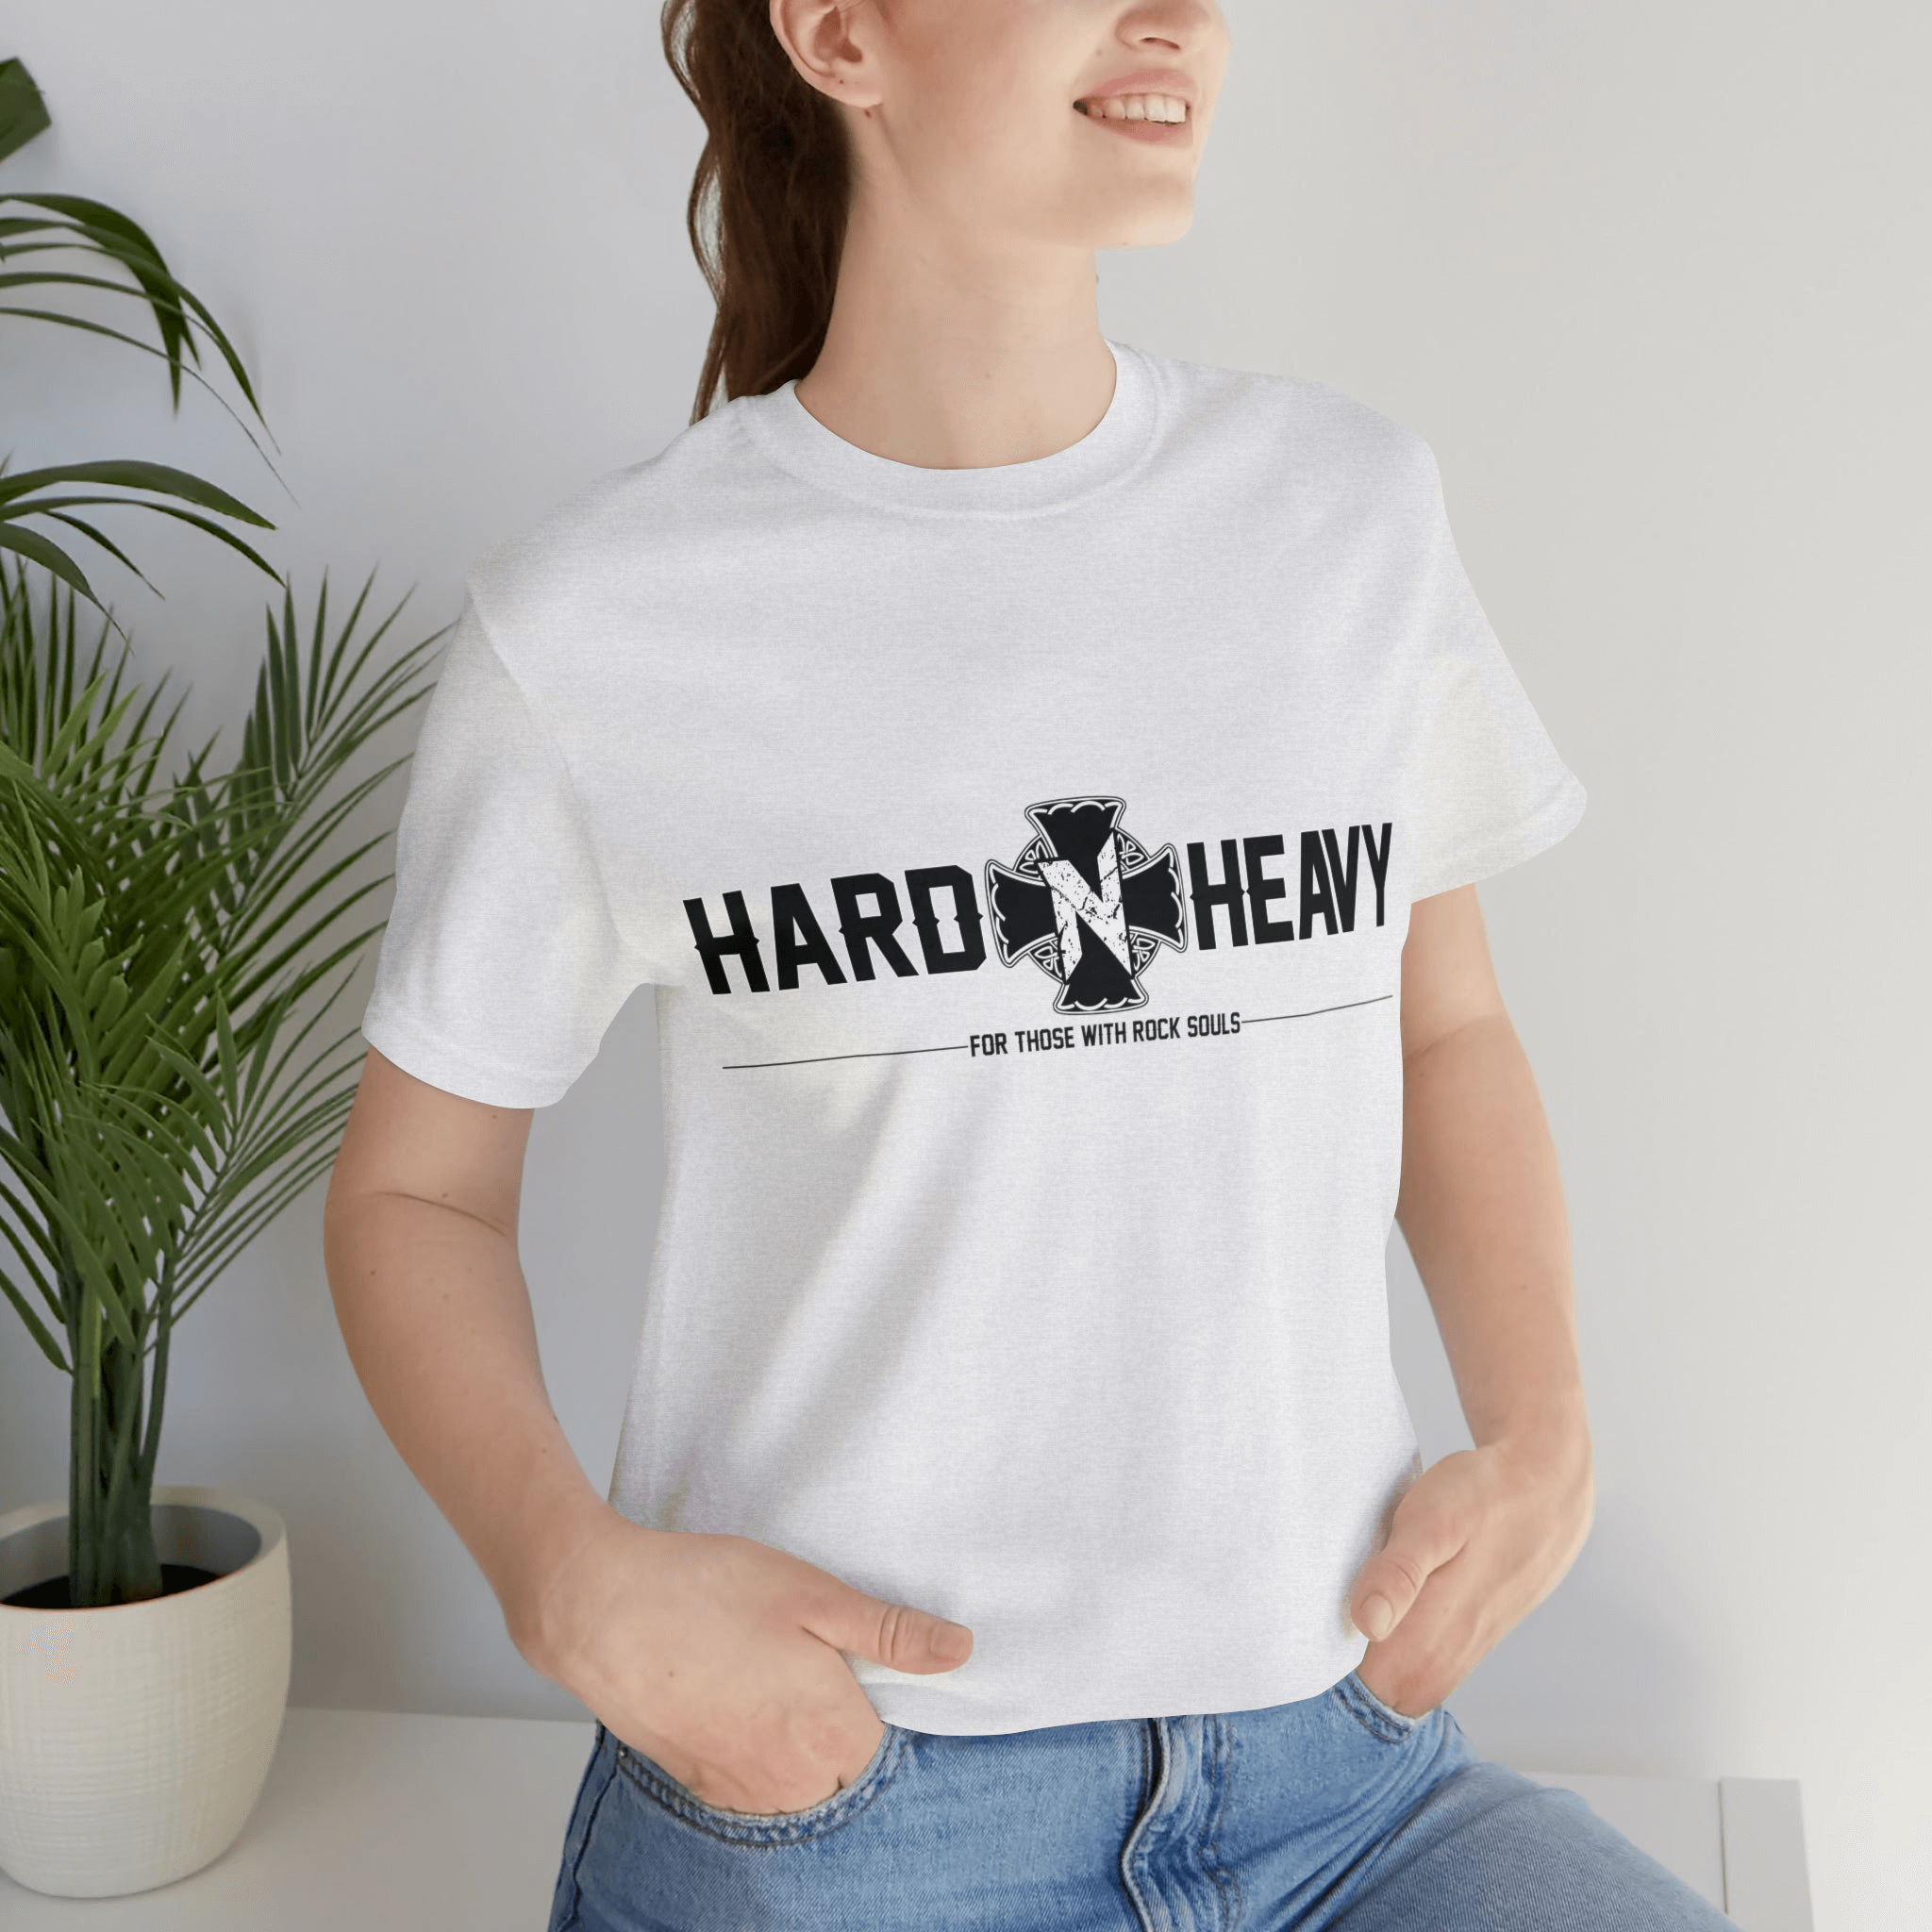 HARD'N'HEAVY Short Sleeve Tee for Women / Alternative Fashion Outfits